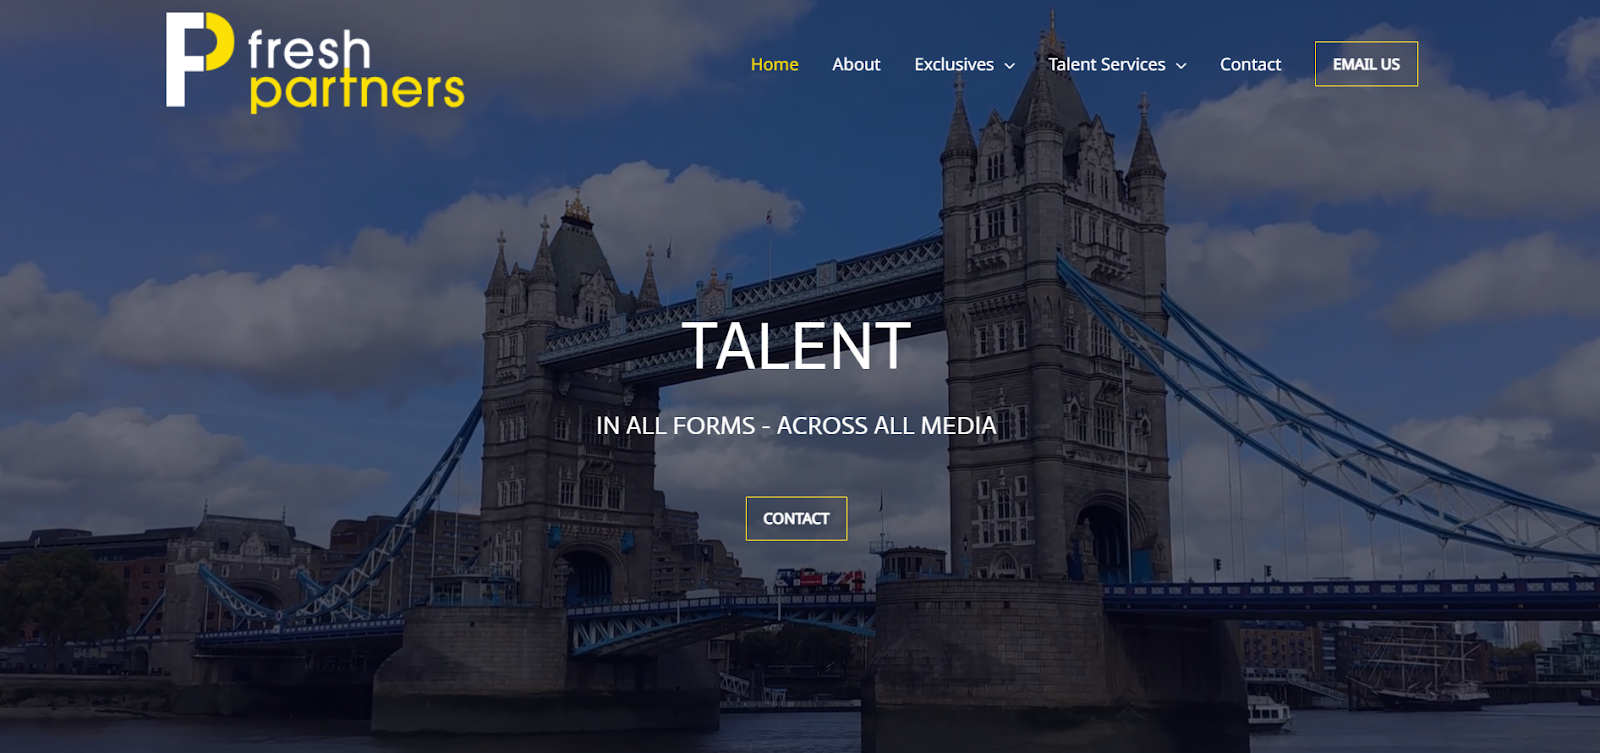 Fresh partners - Talent PR Agency